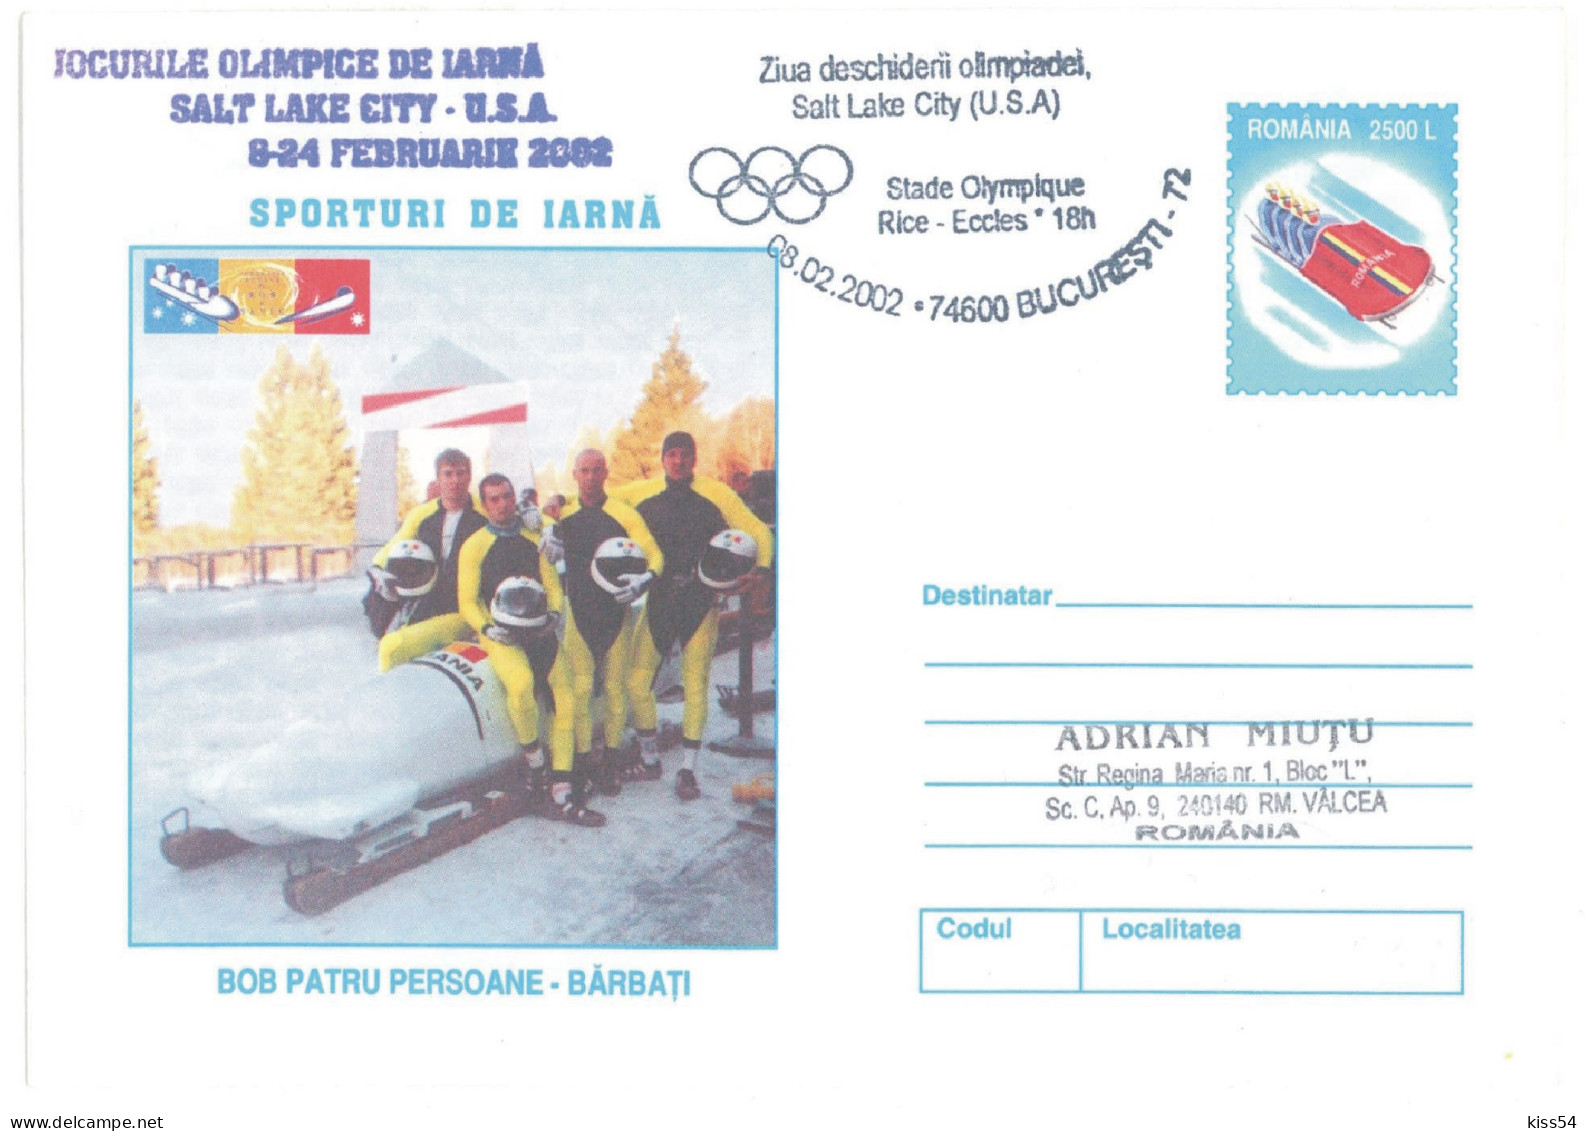 IP 2001 - 0226a U. S. A. SALT LAKE CITY 2002 - 4 BOBSLEIGHT MEN - Winter Olympic Games - Stationery - Used - 2001 - Winter 2002: Salt Lake City